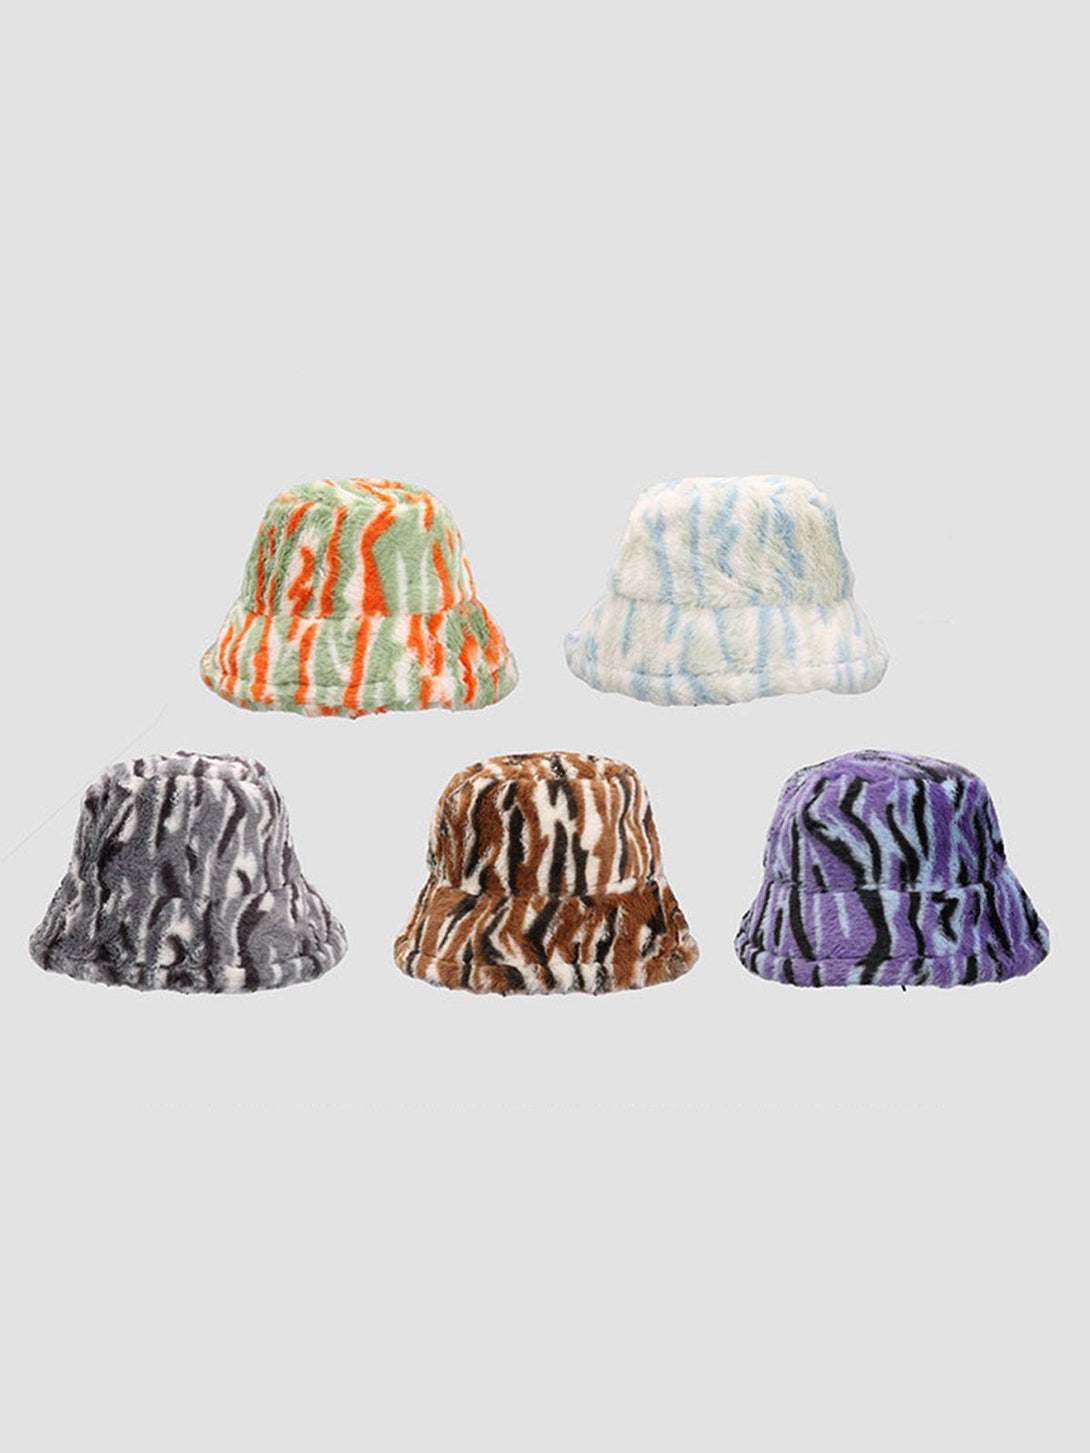 Majesda® - Contrast Striped Plush Vintage Bucket Hat- Outfit Ideas - Streetwear Fashion - majesda.com